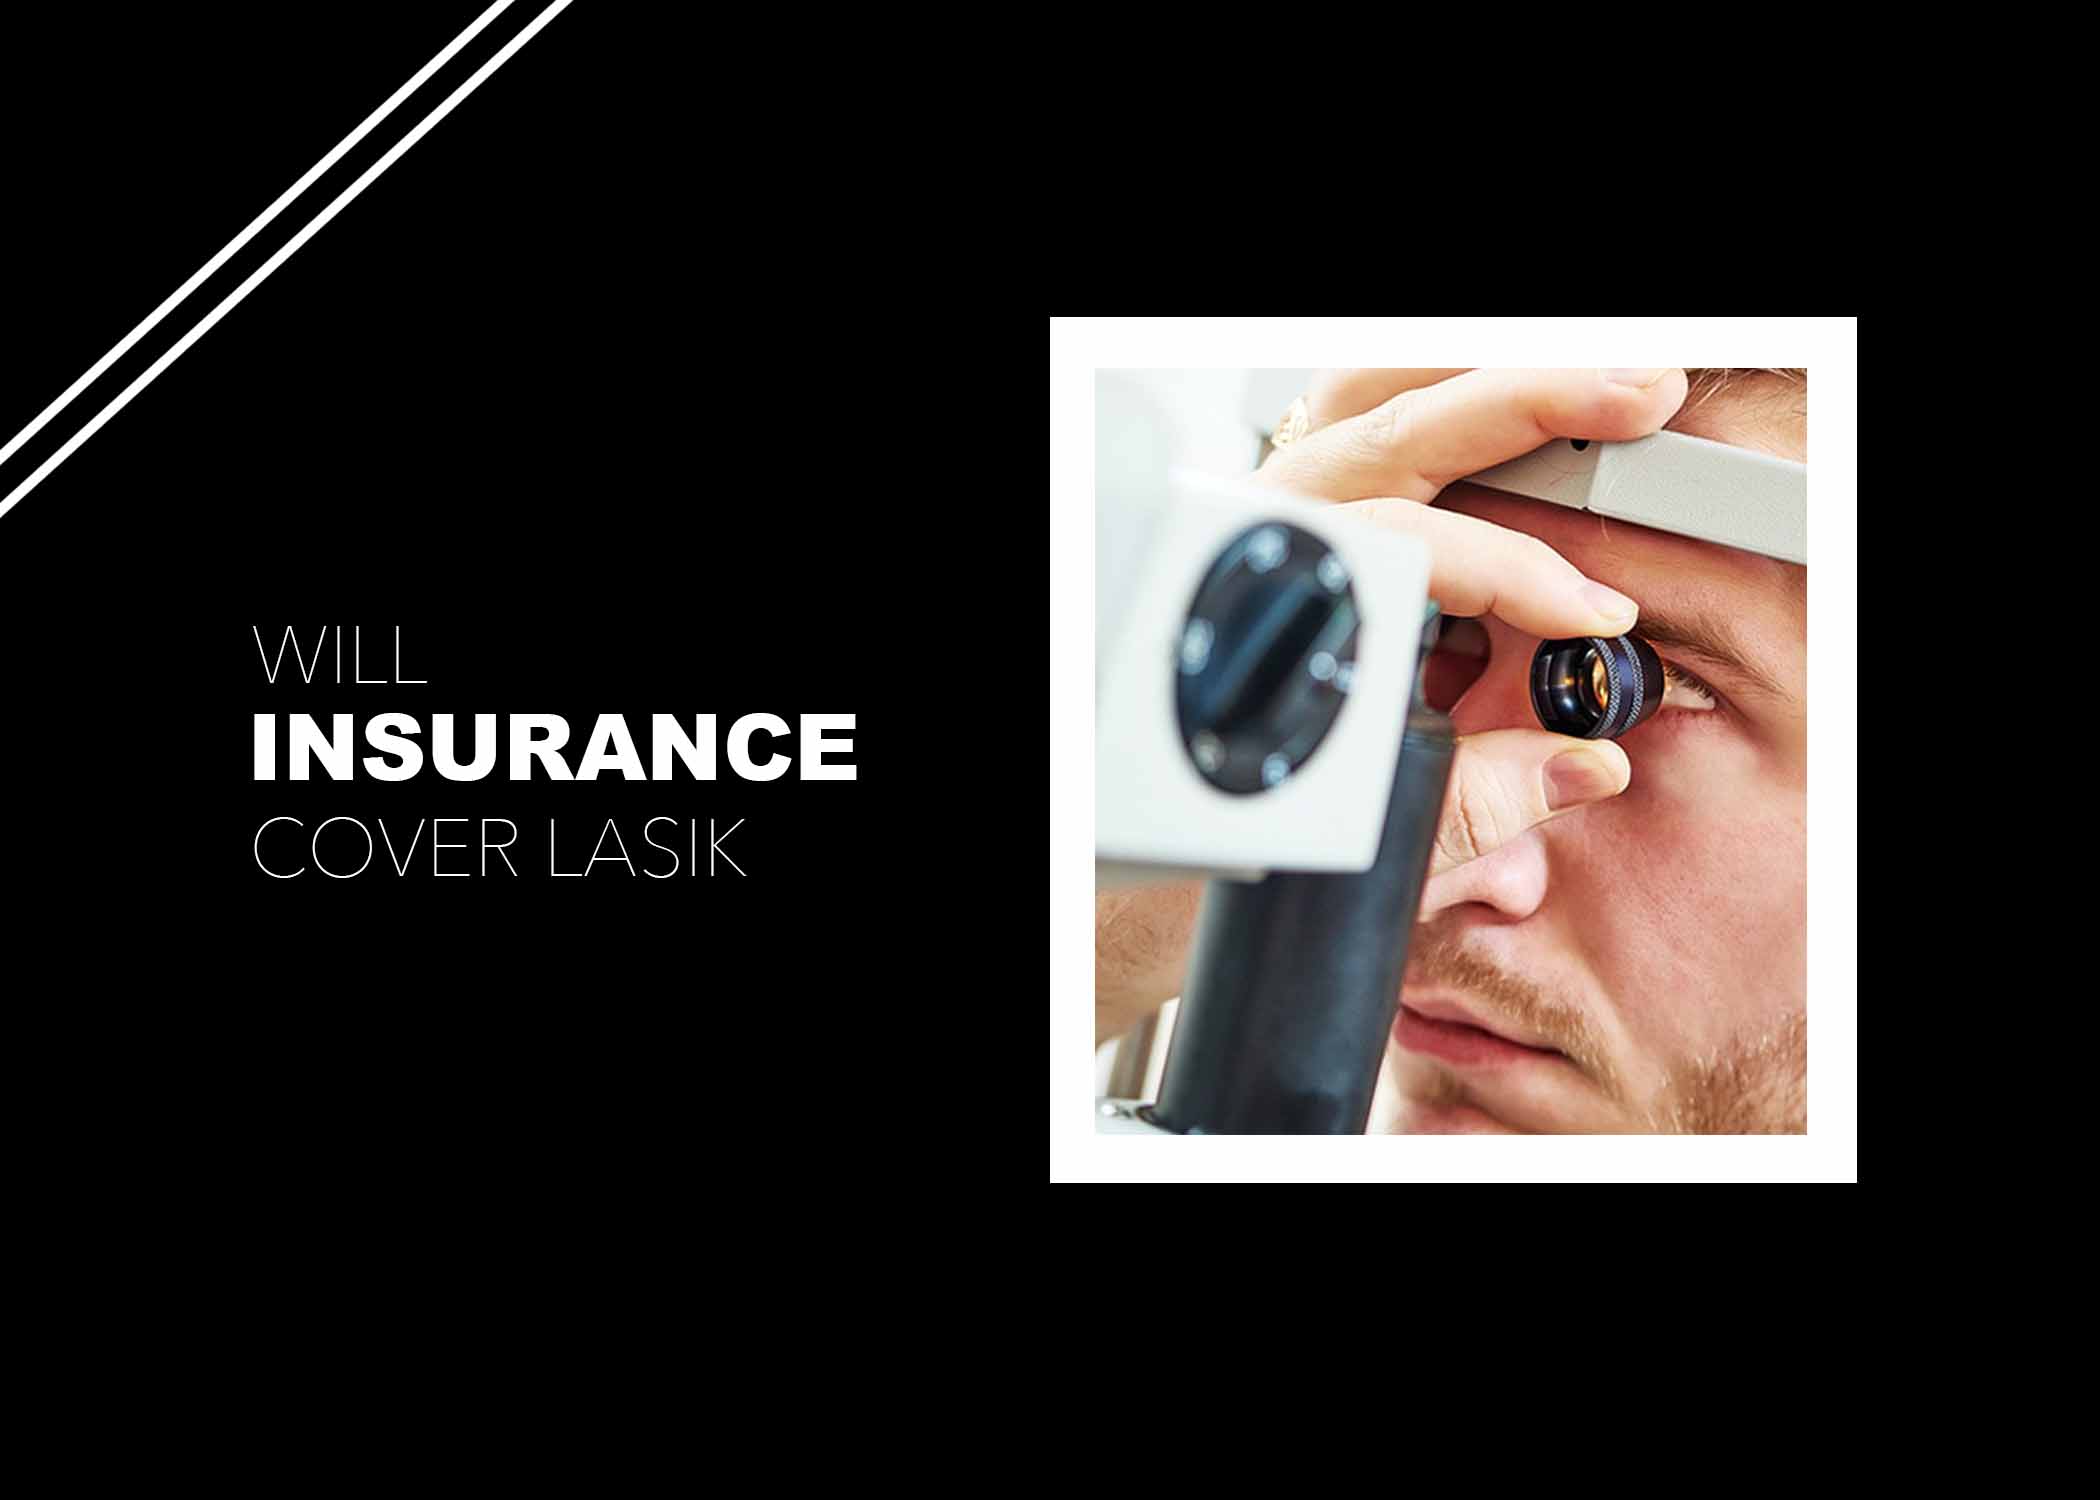 Will Insurance Cover LASIK